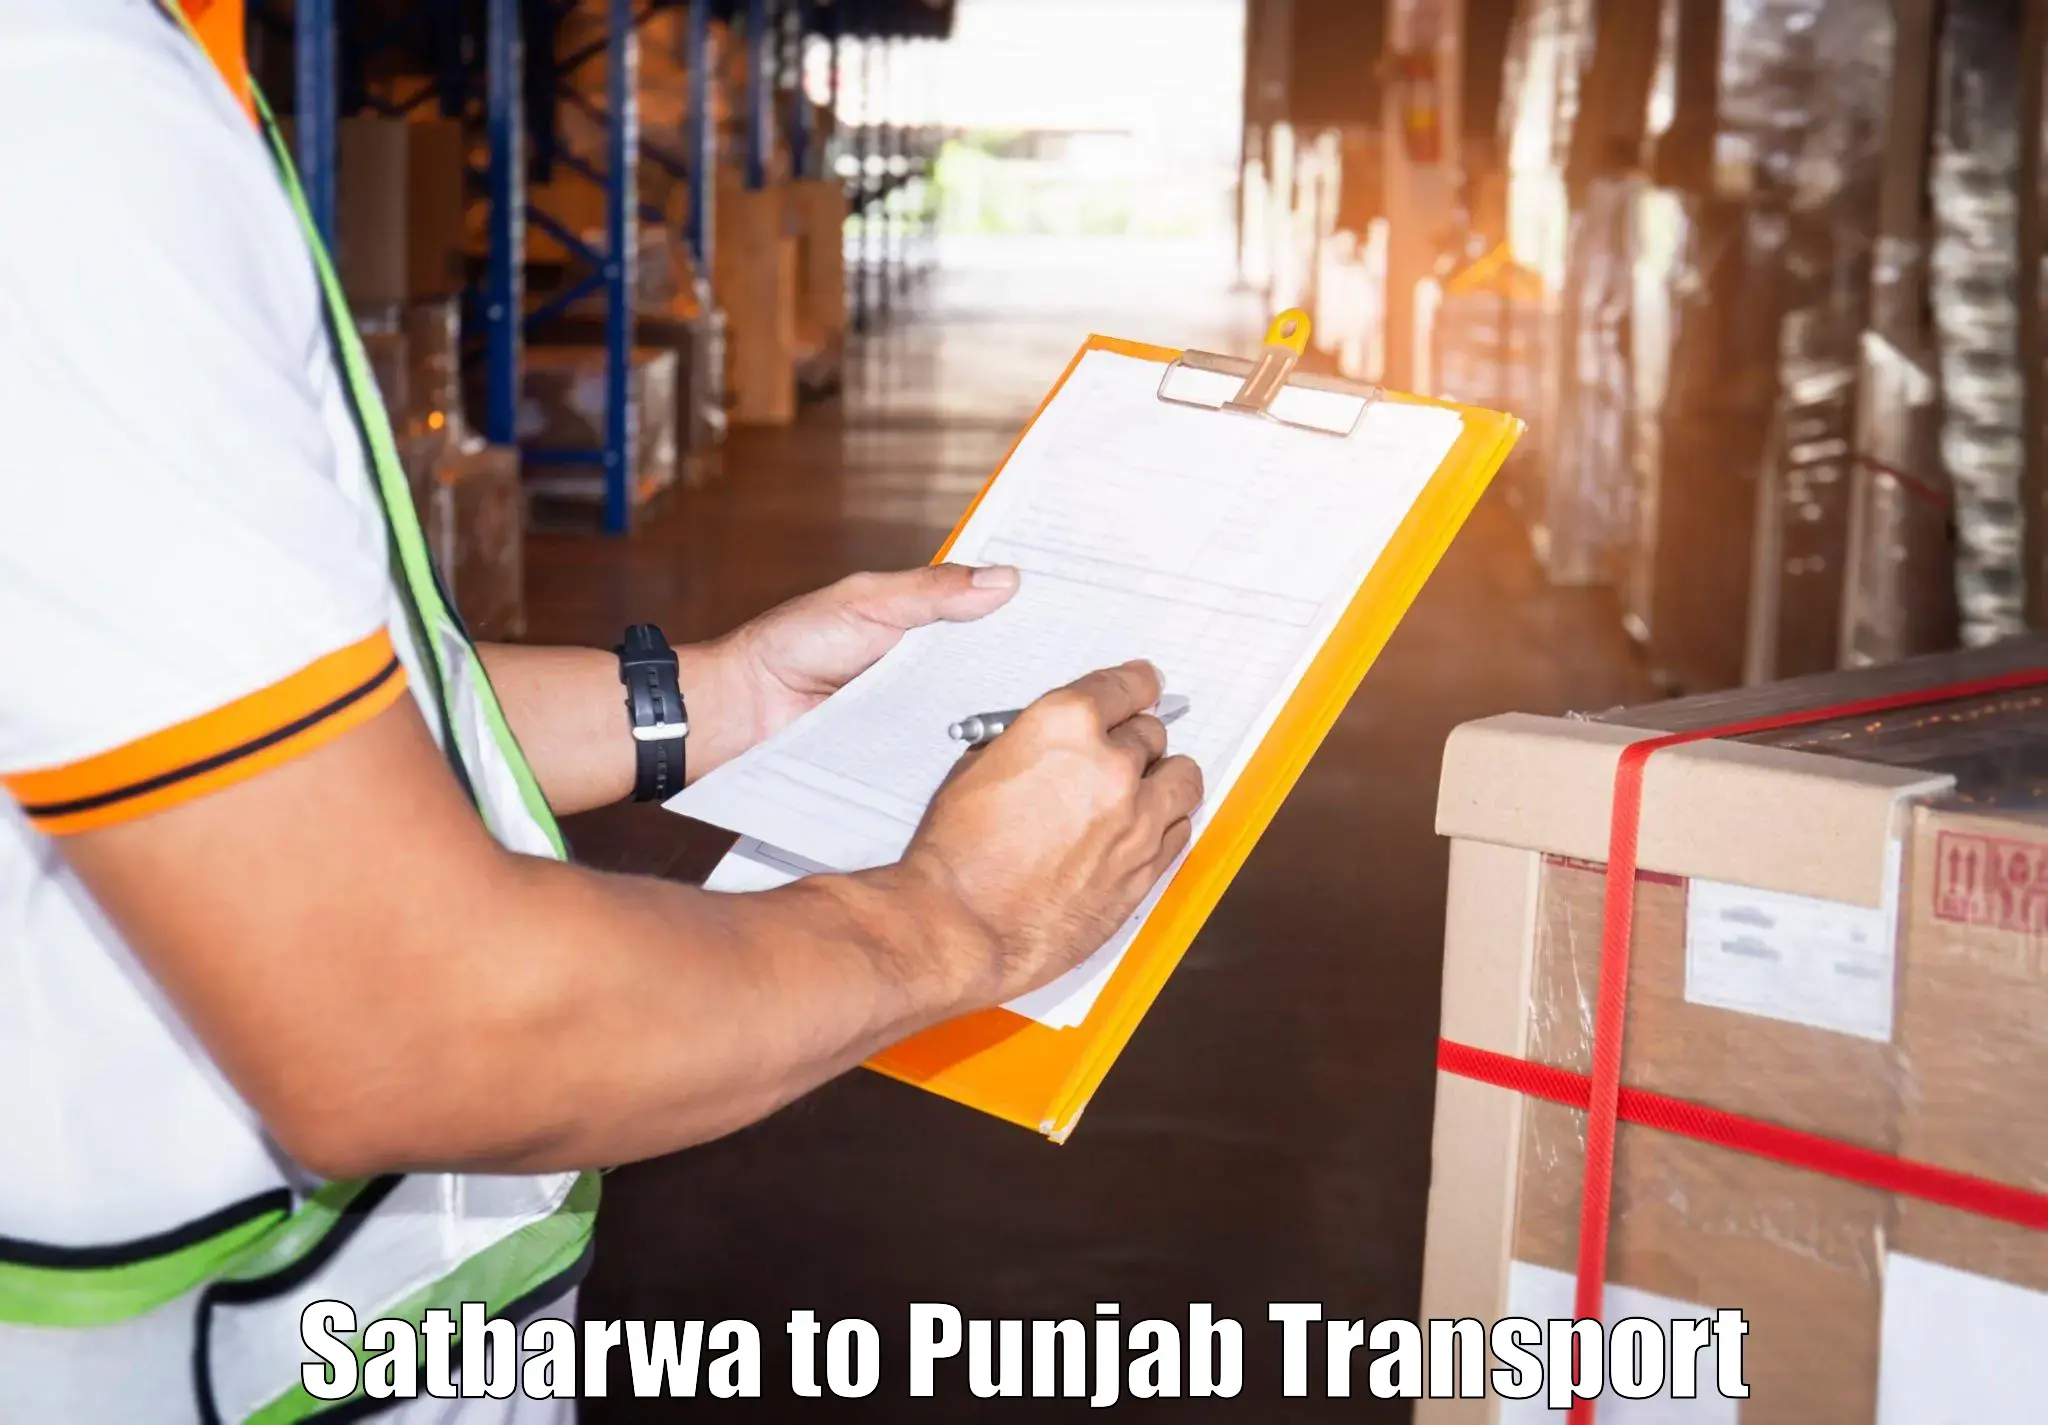 Express transport services Satbarwa to Faridkot